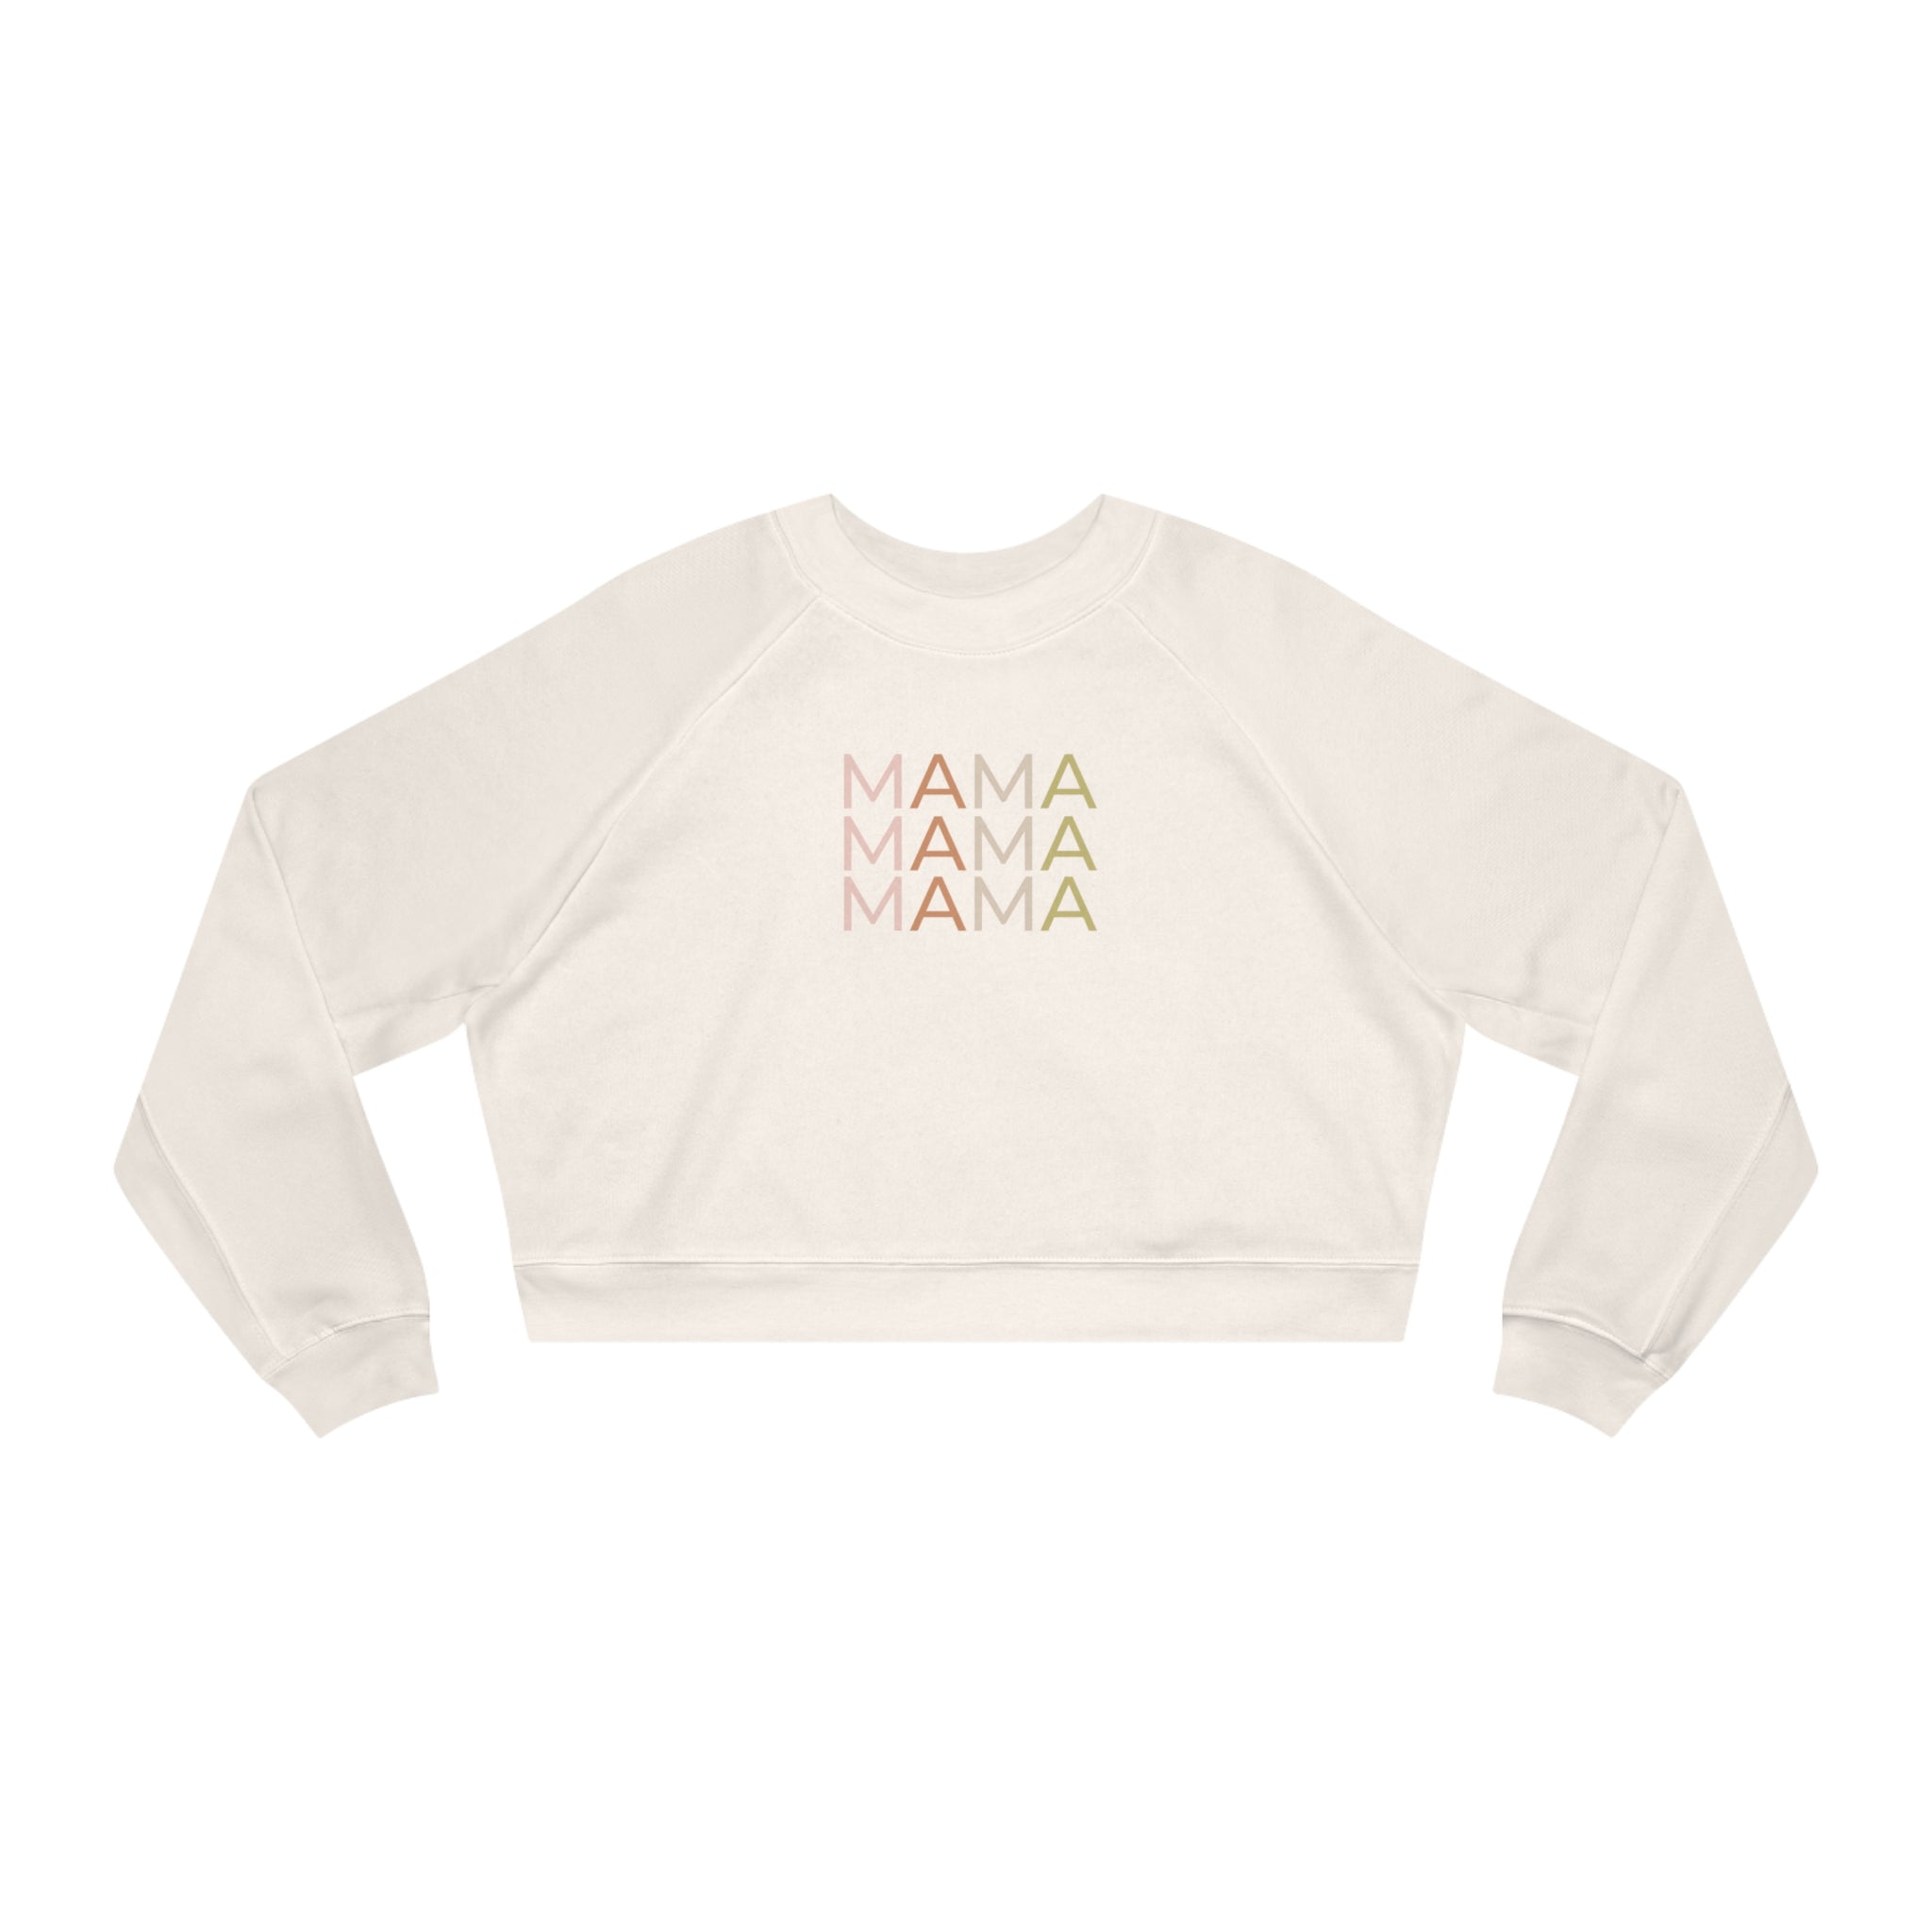 White mana cropped sweatshirt